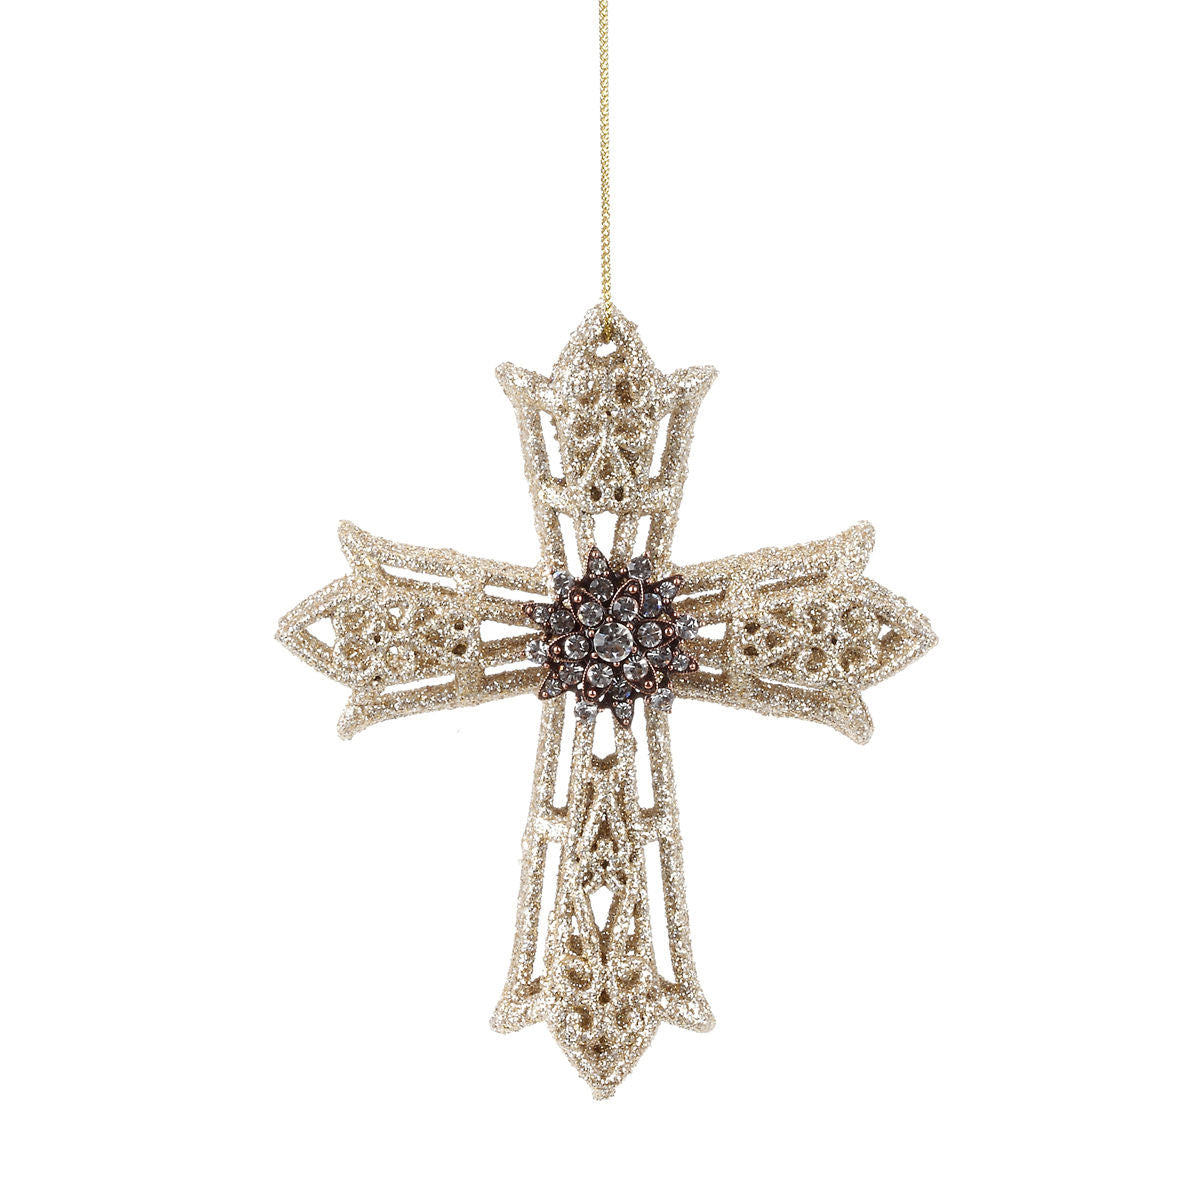 Ornate Glitter Cross Ornament